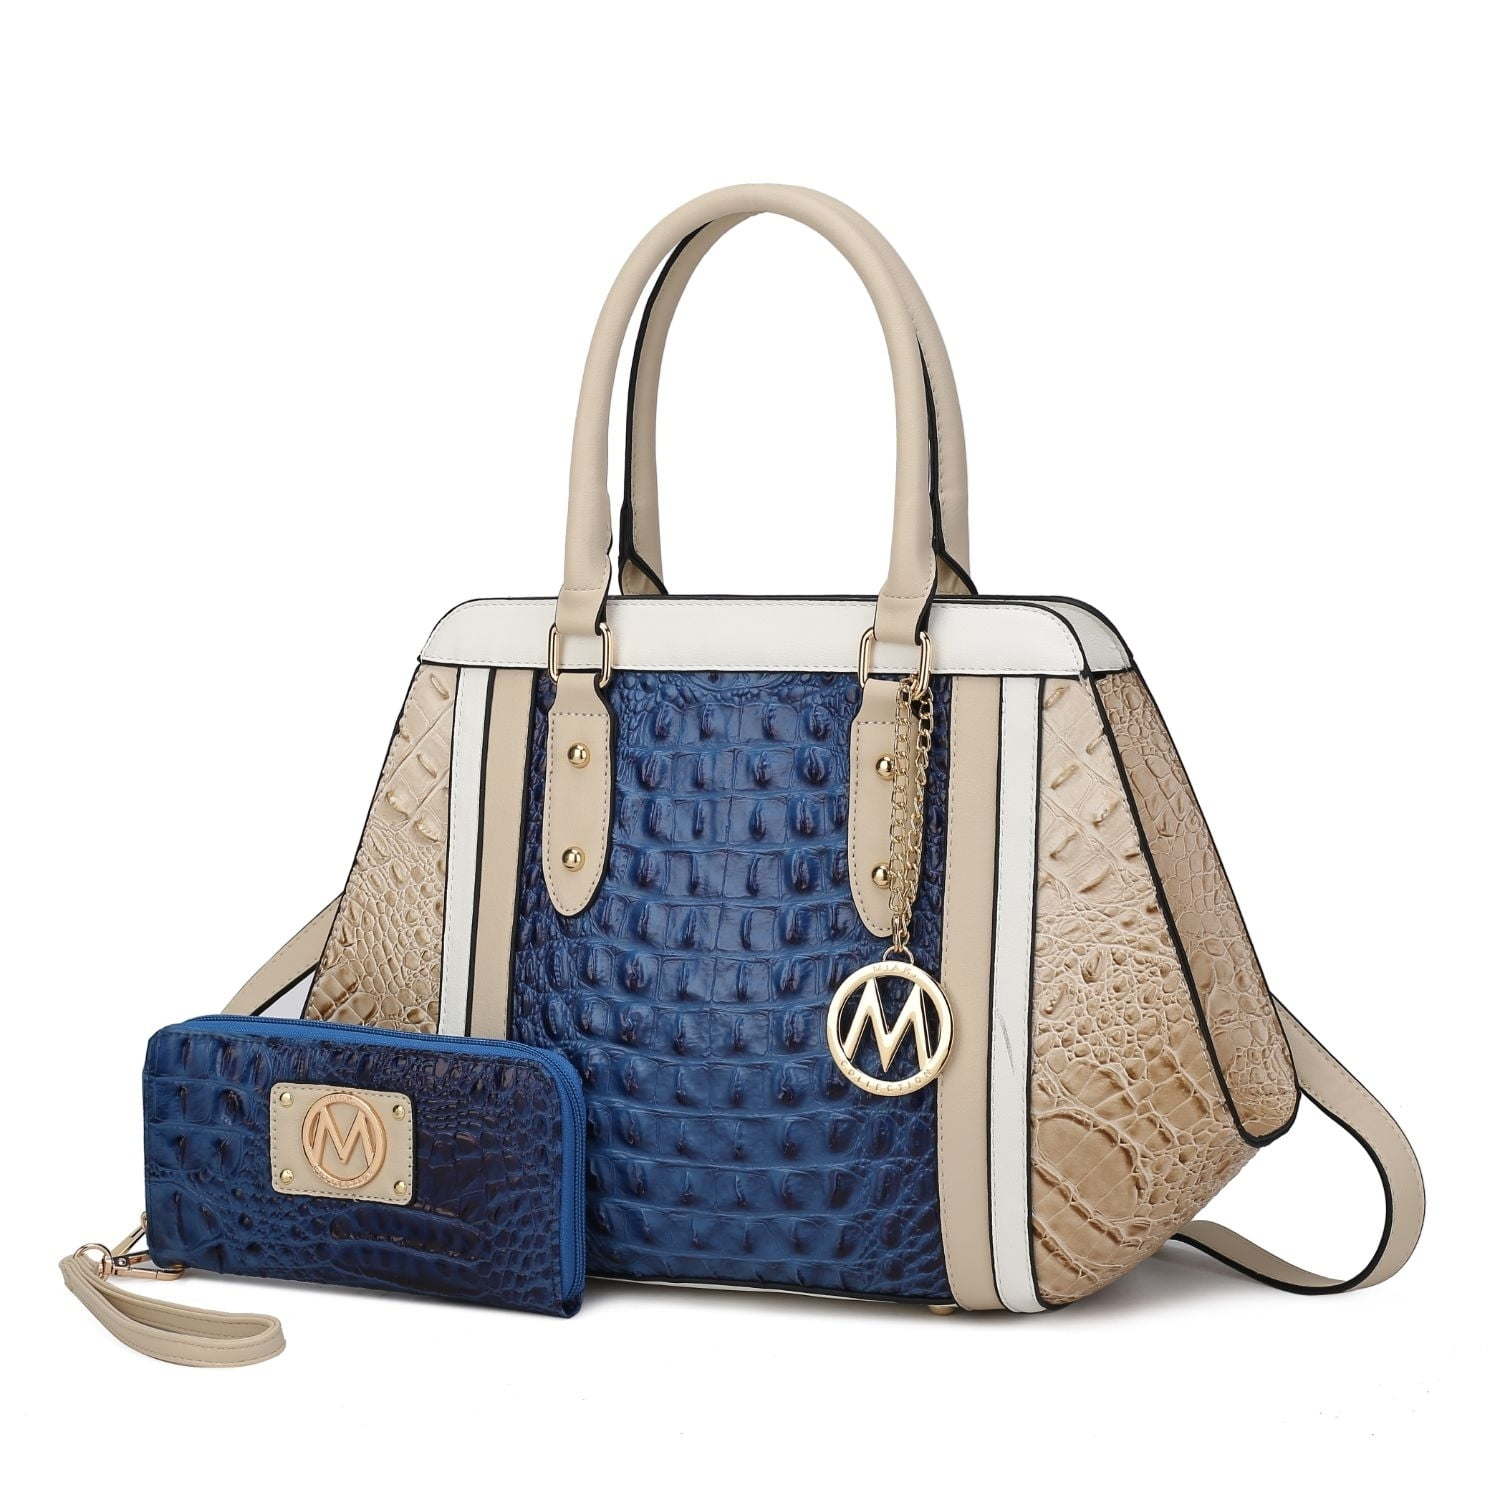 MKF Collection - Daisy Croco Satchel Handbag & Wristlet Wallet Set 2 pcs by Mia K - Charcoal Gray 3P's Inclusive Beauty